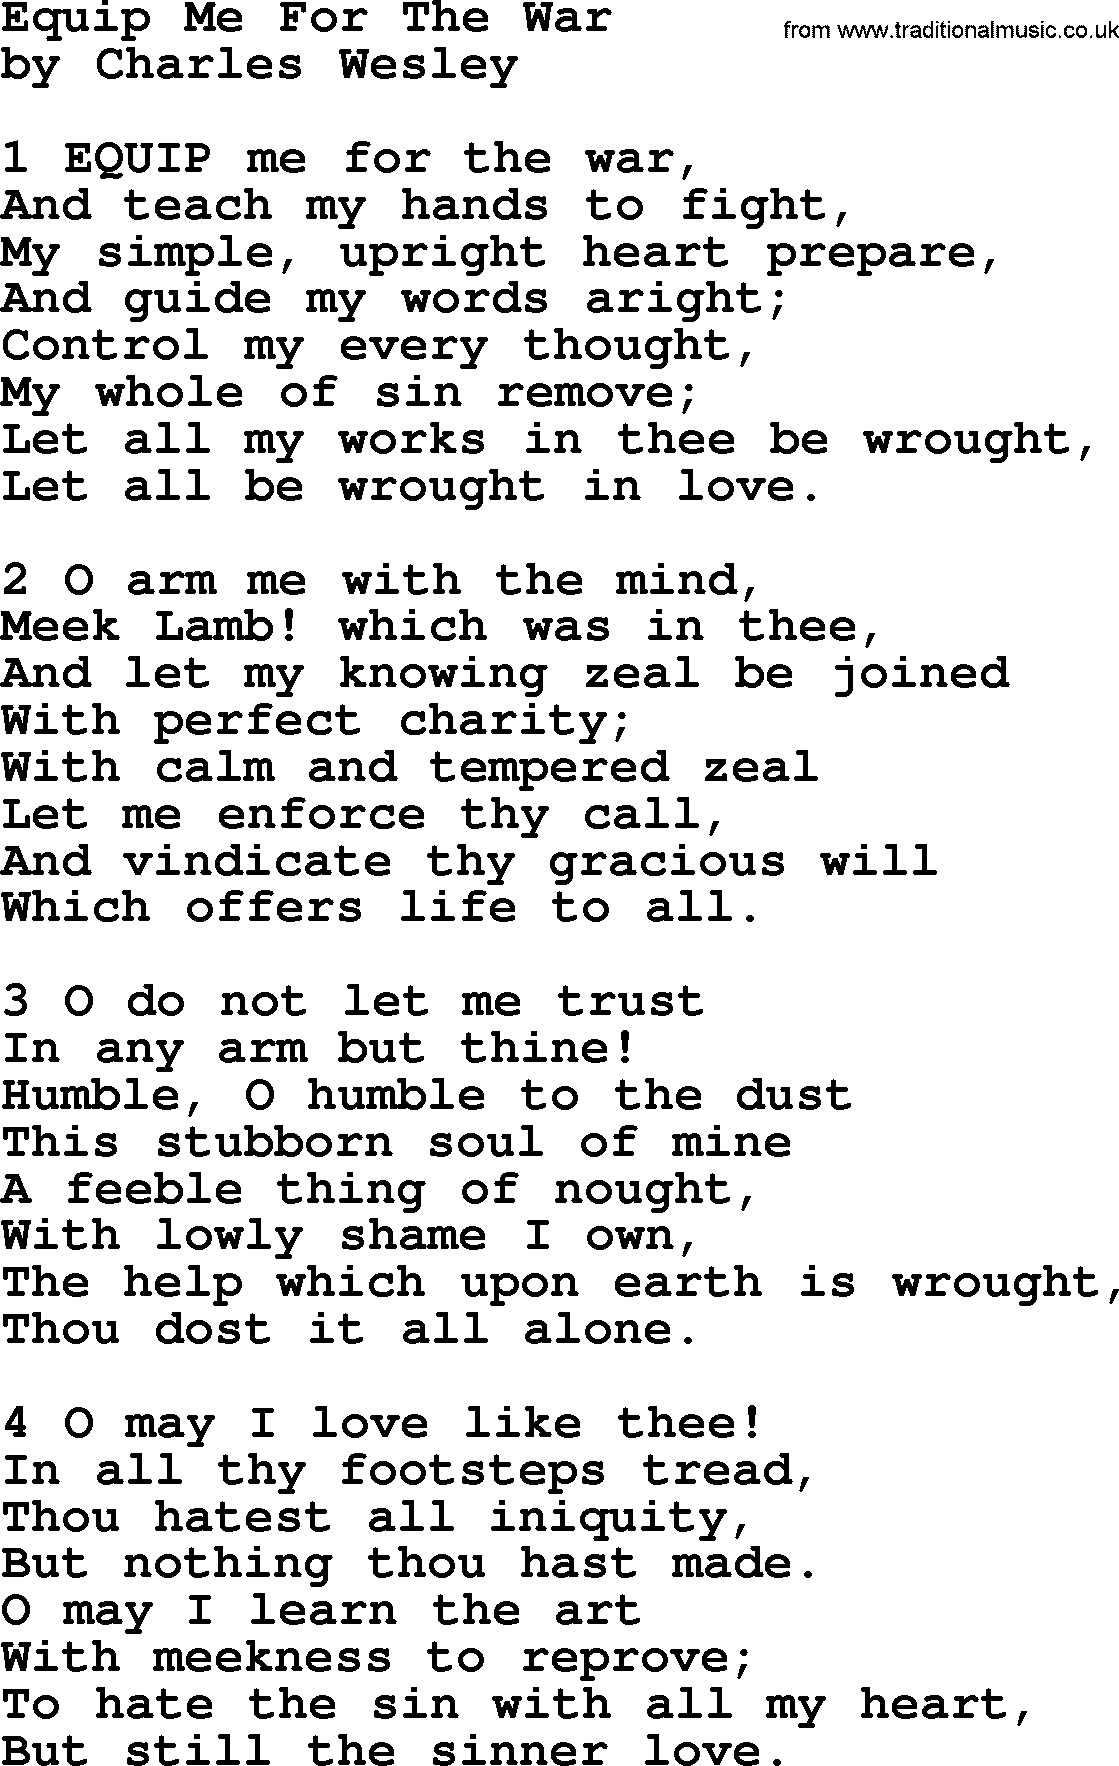 Charles Wesley hymn: Equip Me For The War, lyrics